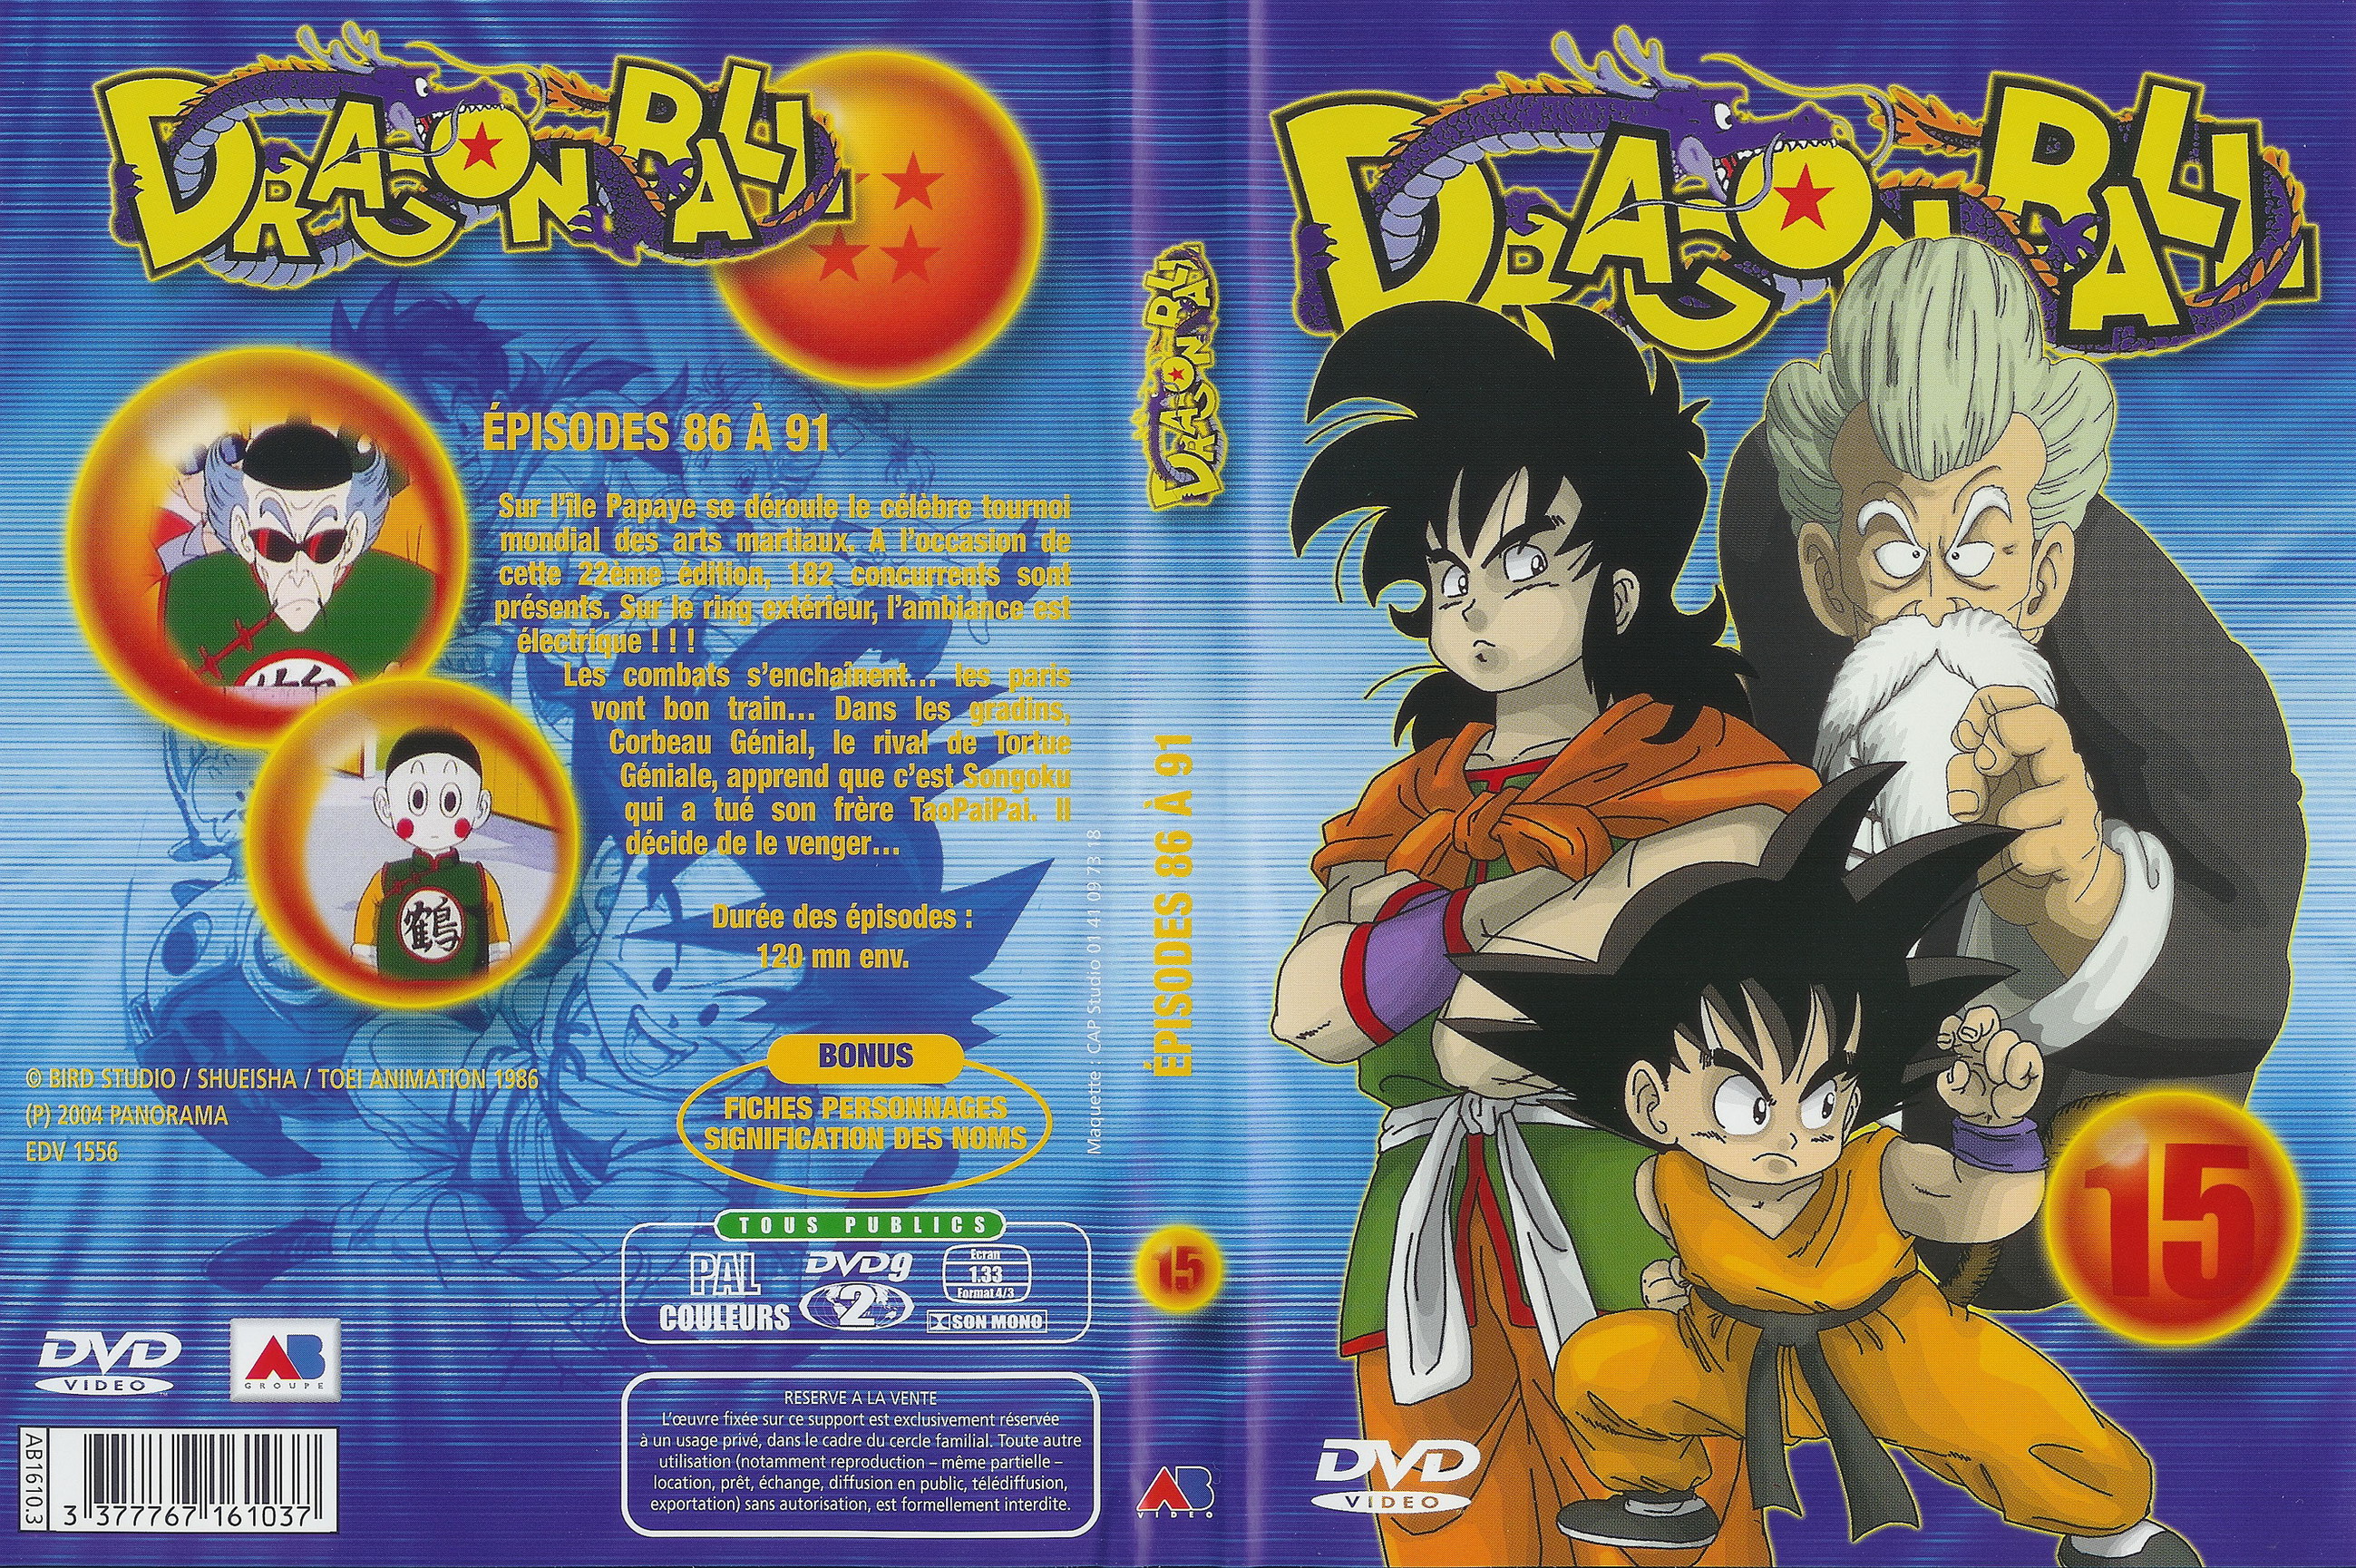 Jaquette DVD Dragon ball vol 15 v2